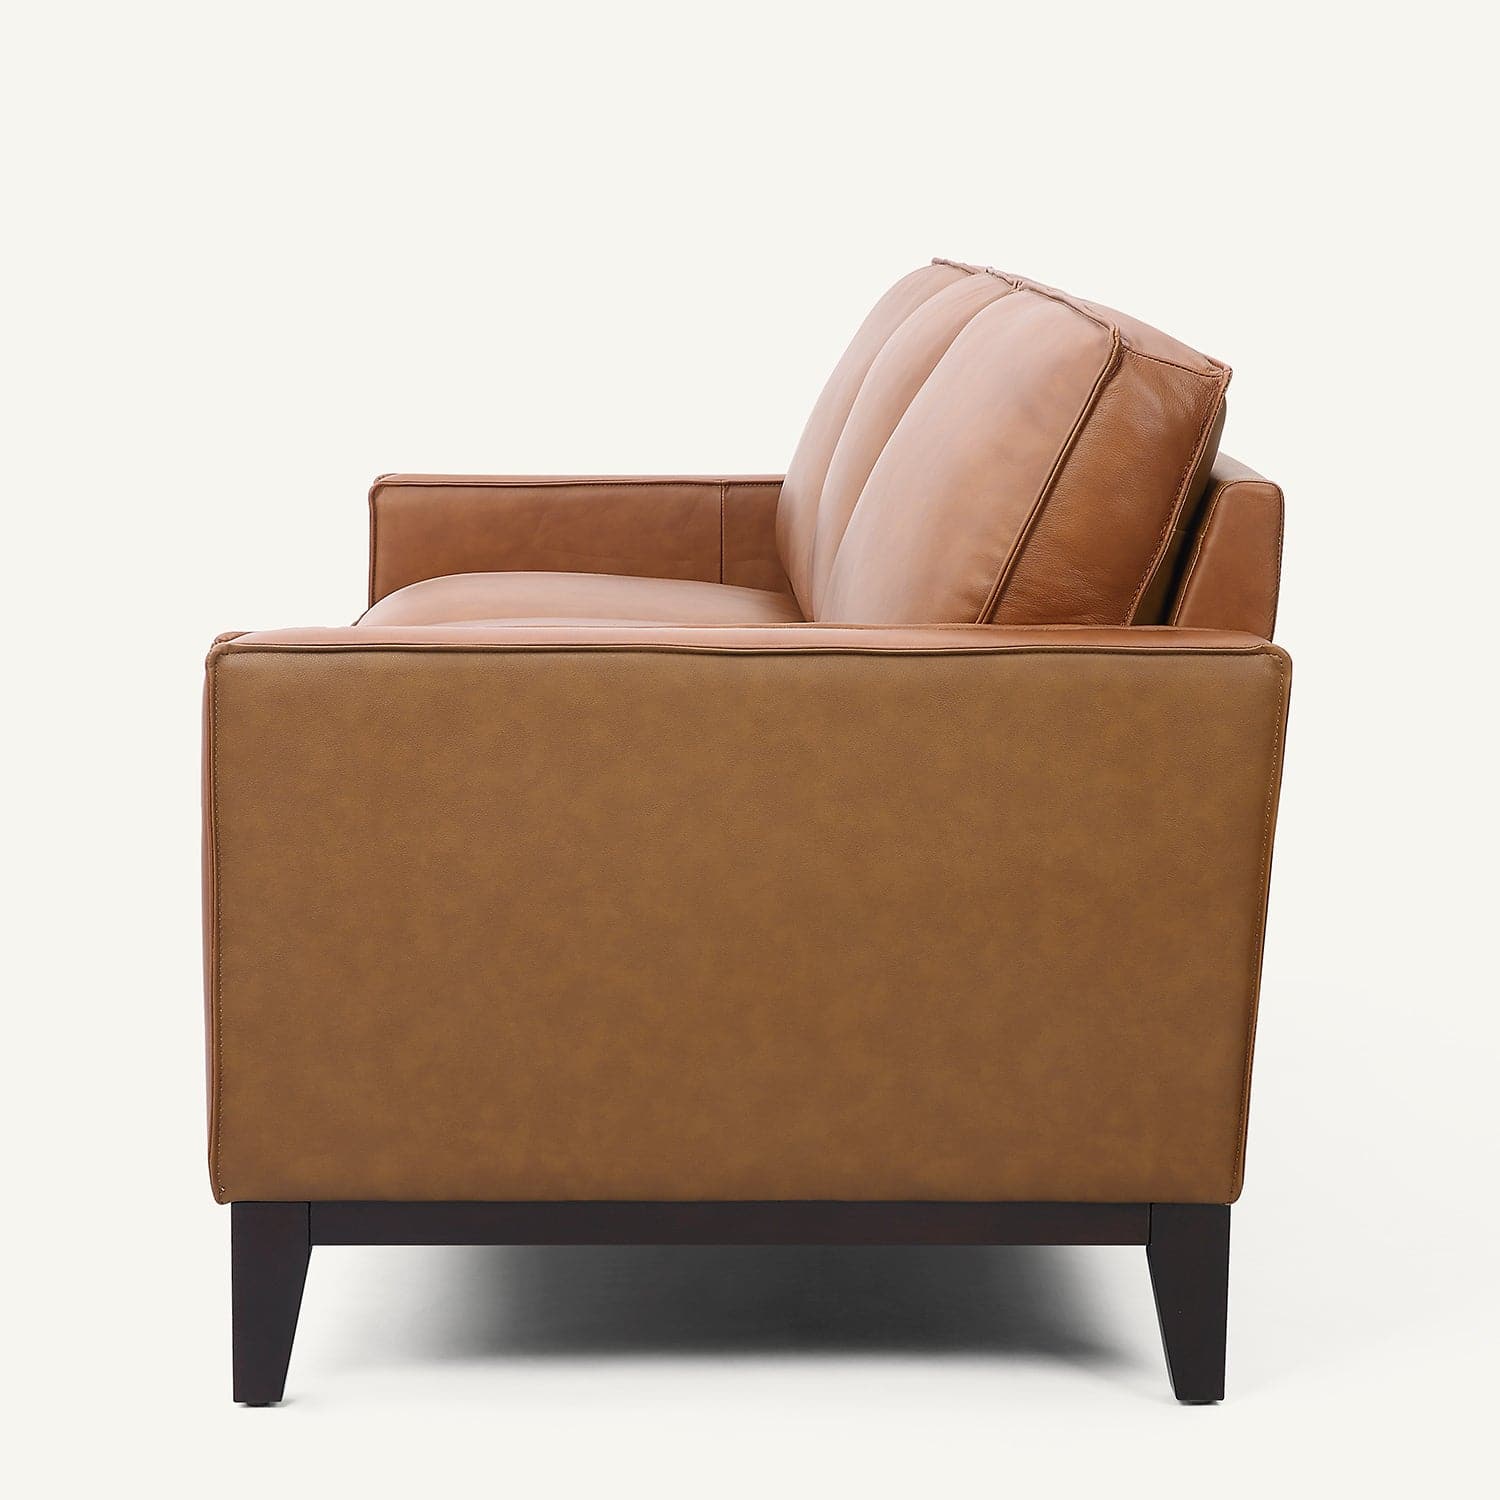 Pimlico Camel Brown Top Grain Leather 3 Pieces Living Room Sofa Set